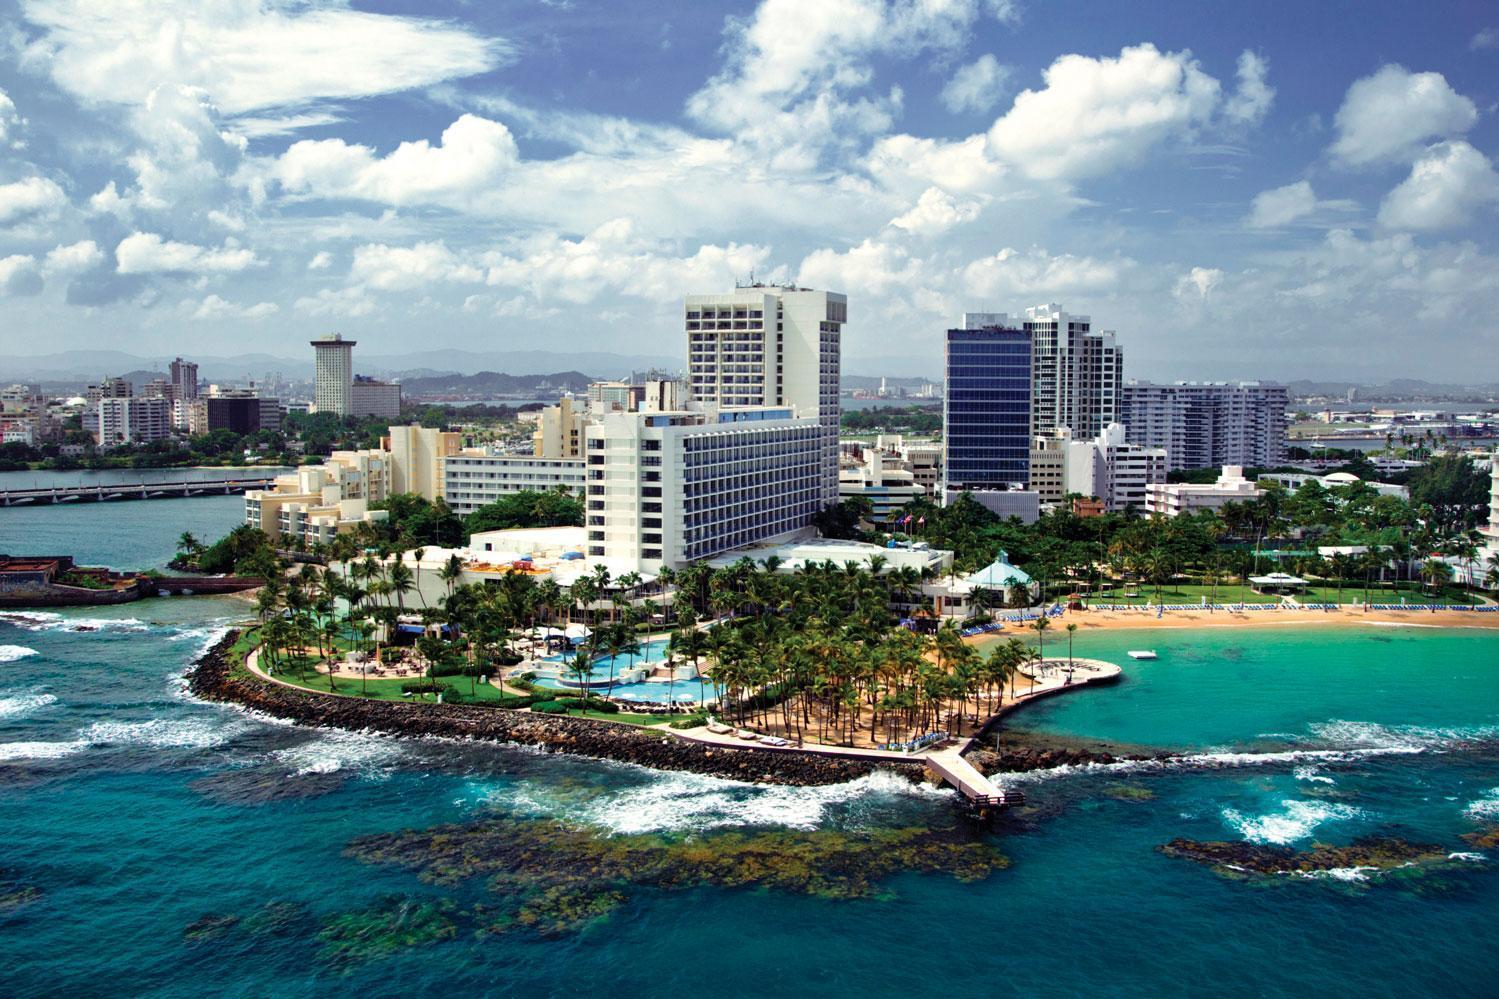 Puerto Rico Travel (id: 15349)